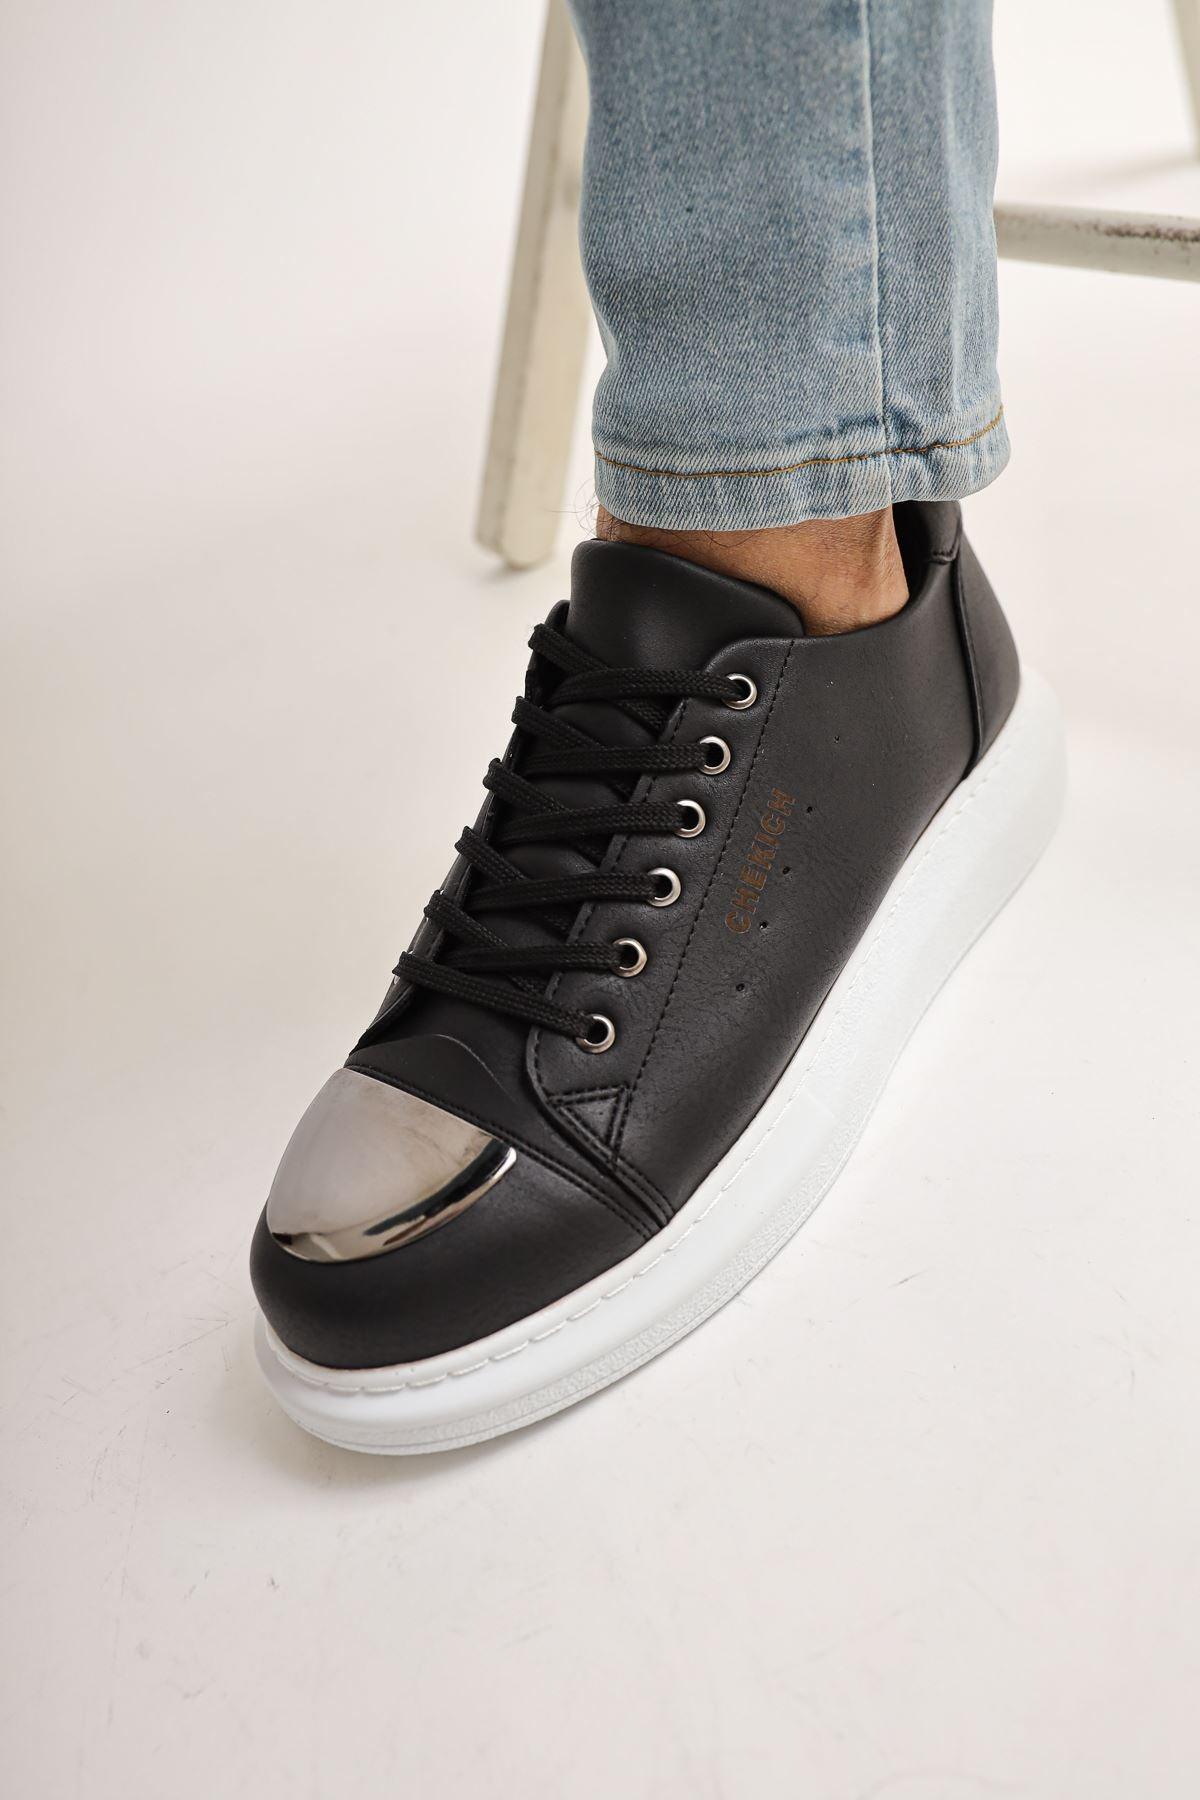 CH175 BT Men's Shoes BLACK - STREET MODE ™